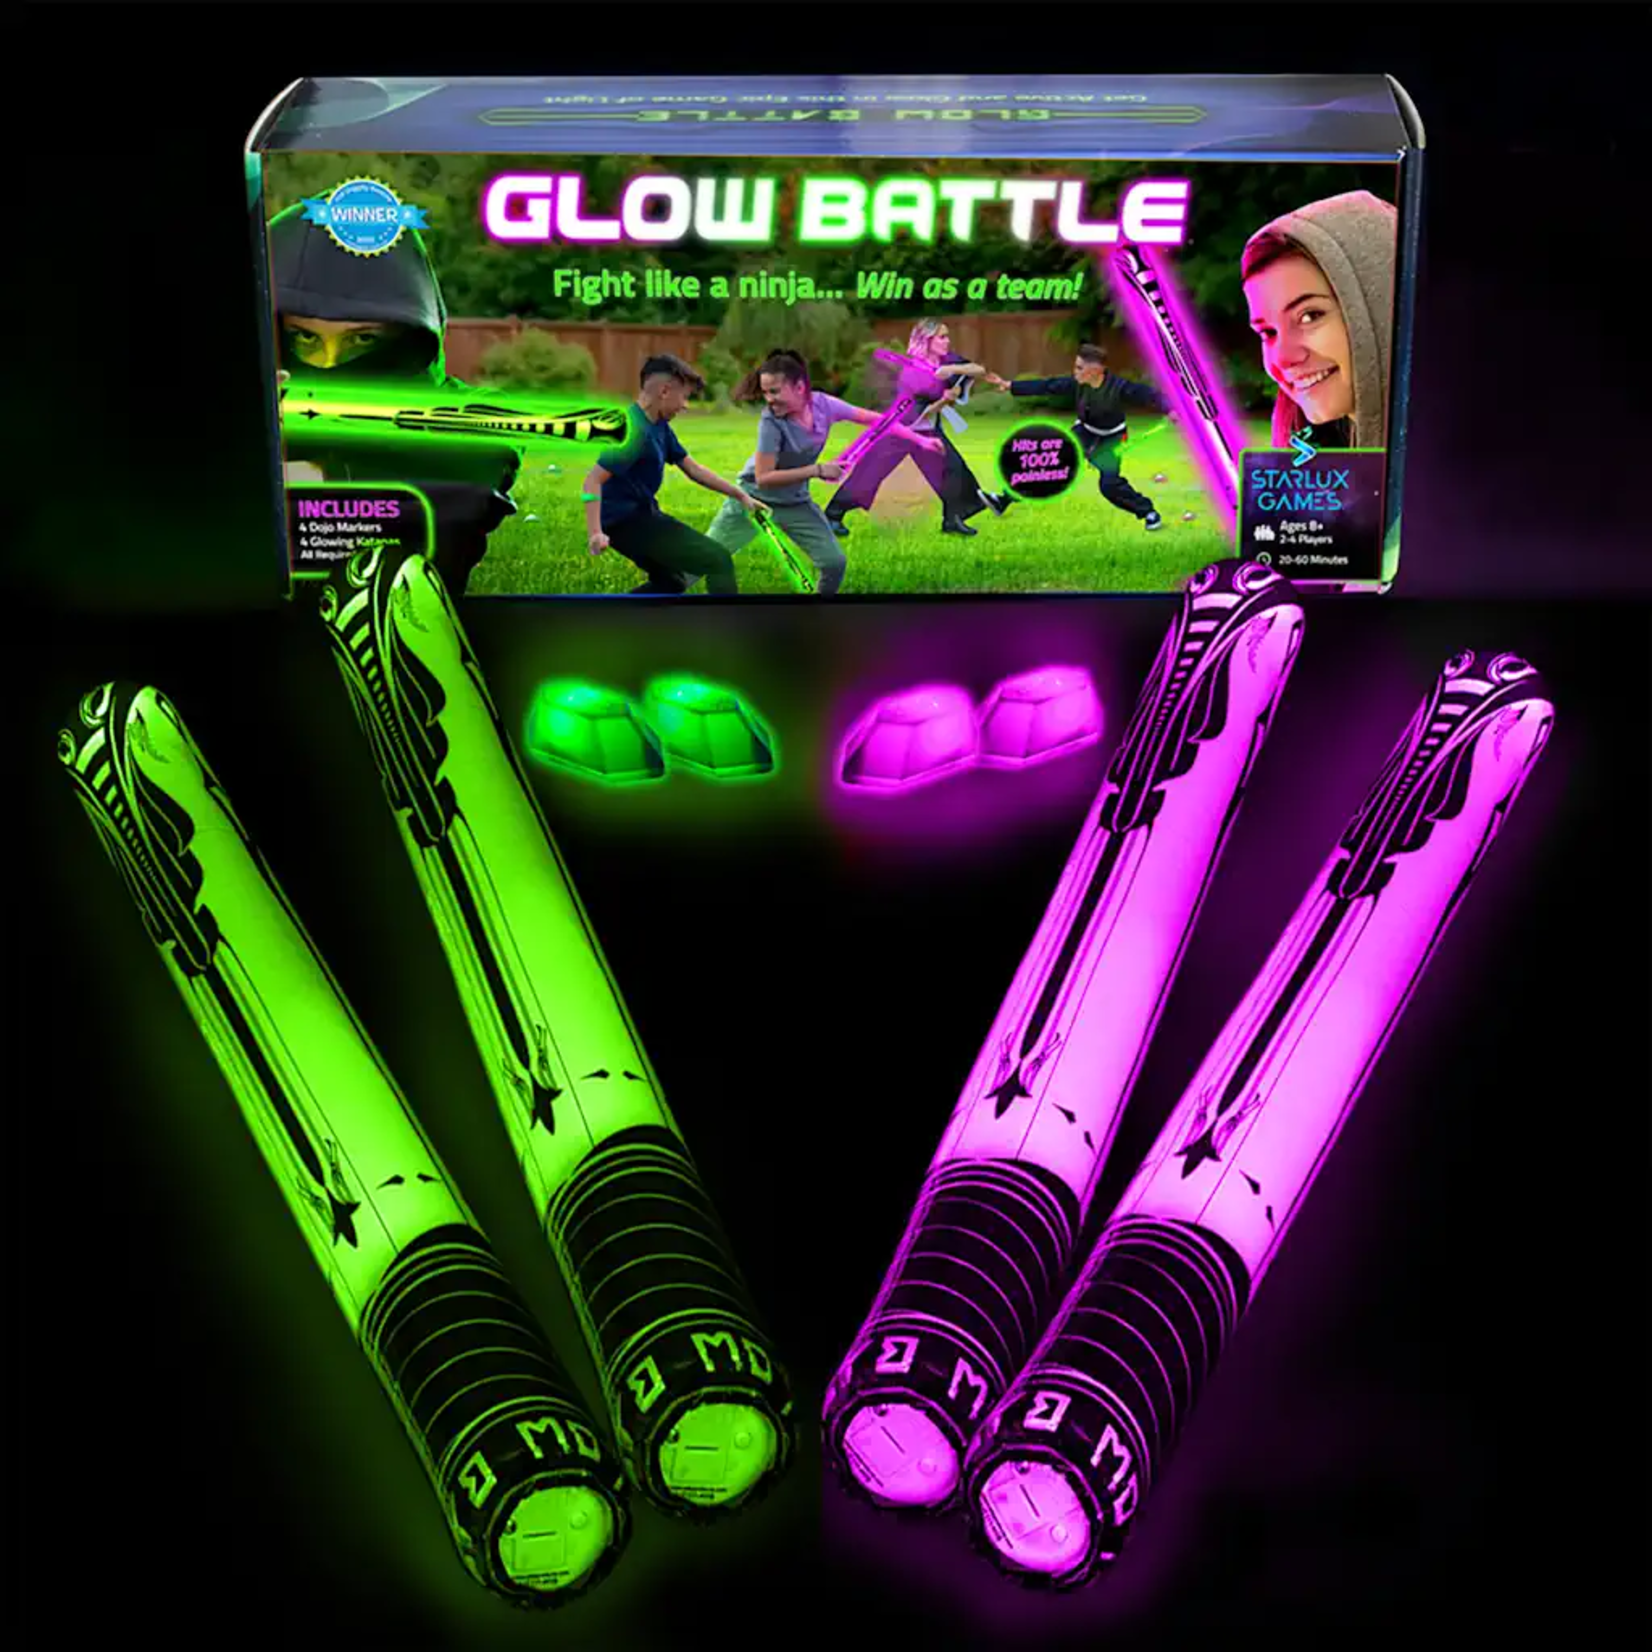 Starlux Games Glow Battle